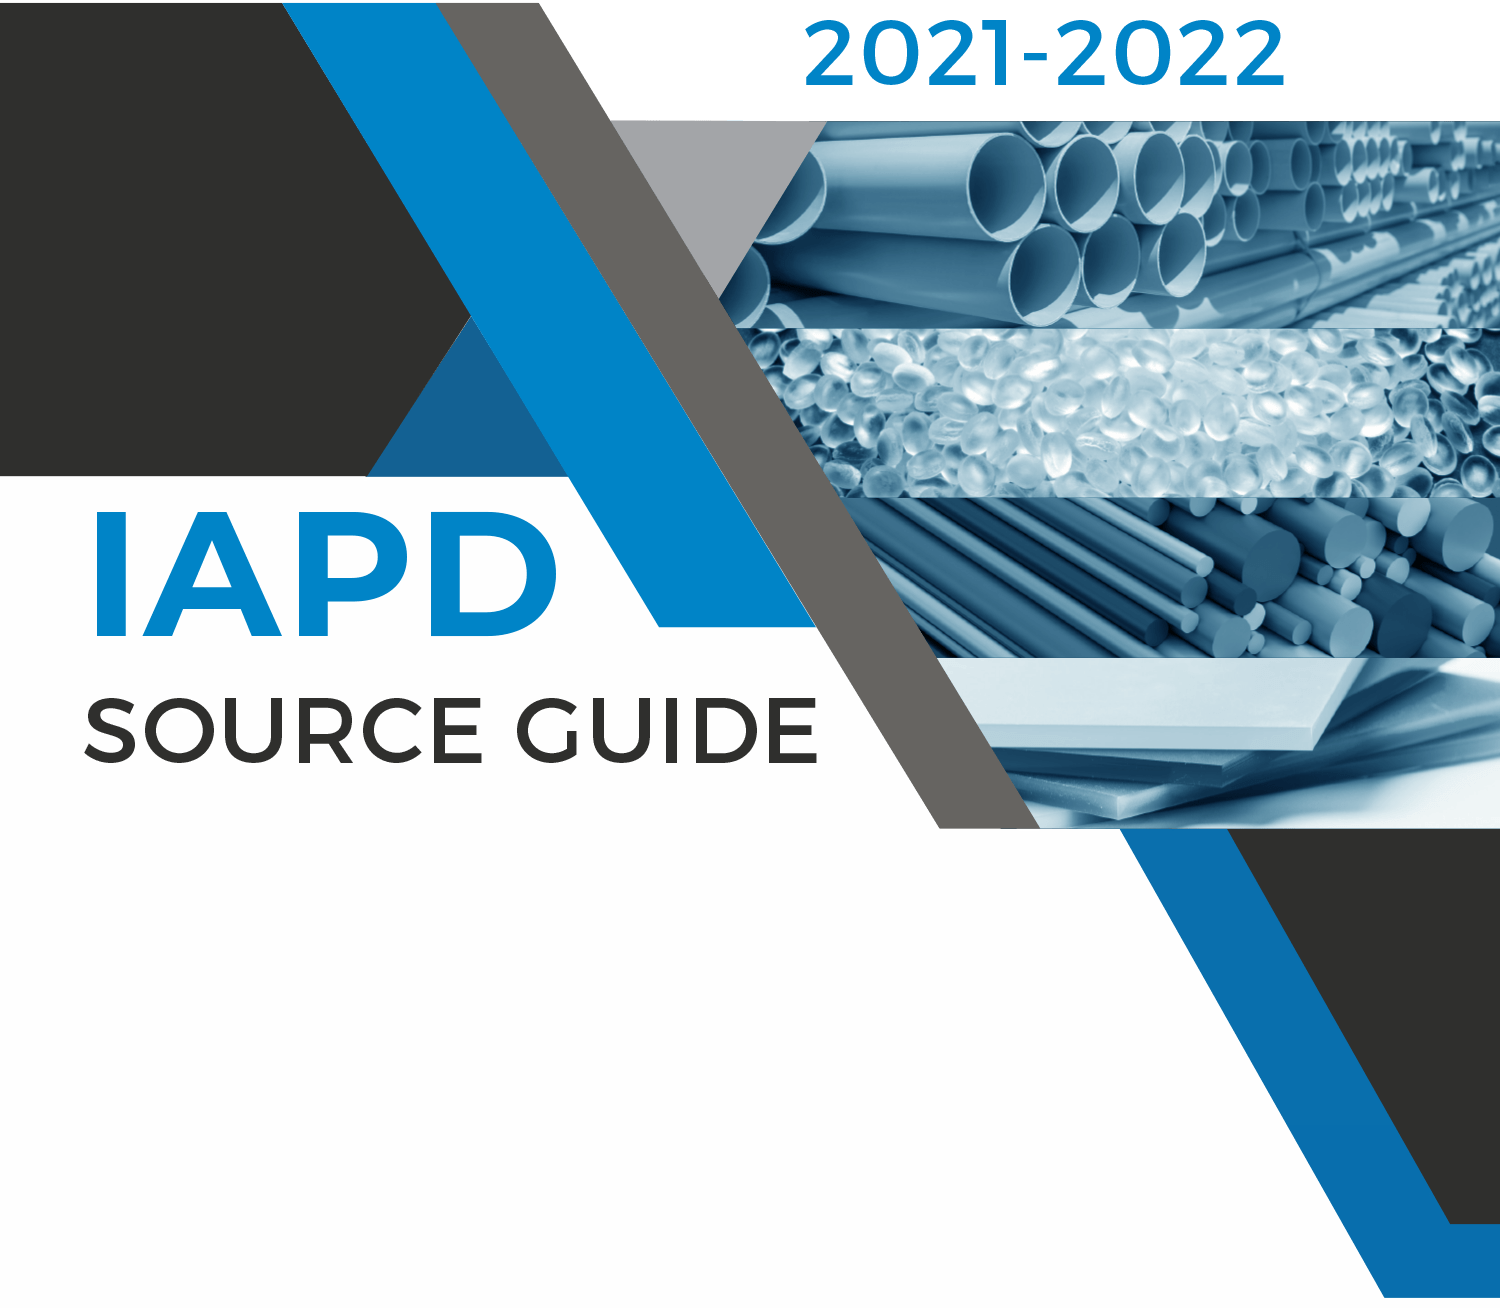 IAPD Source Guide 2021-2022